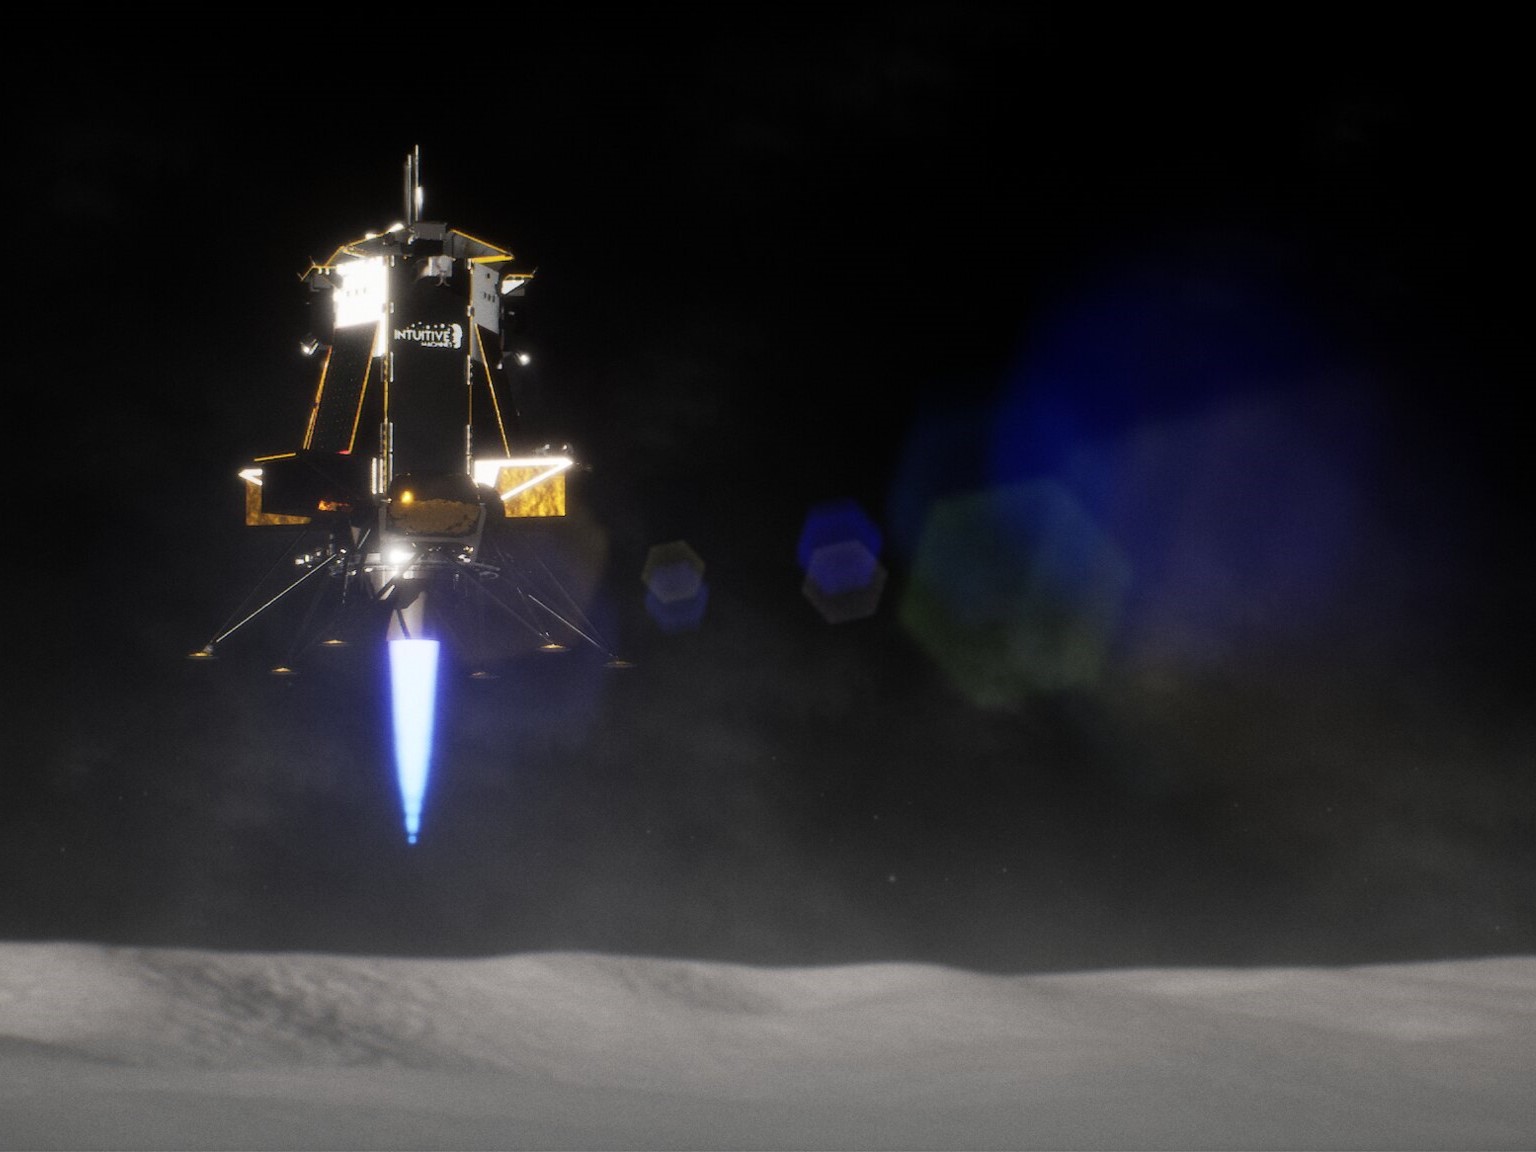 lunar lander hovering over the moon's surface